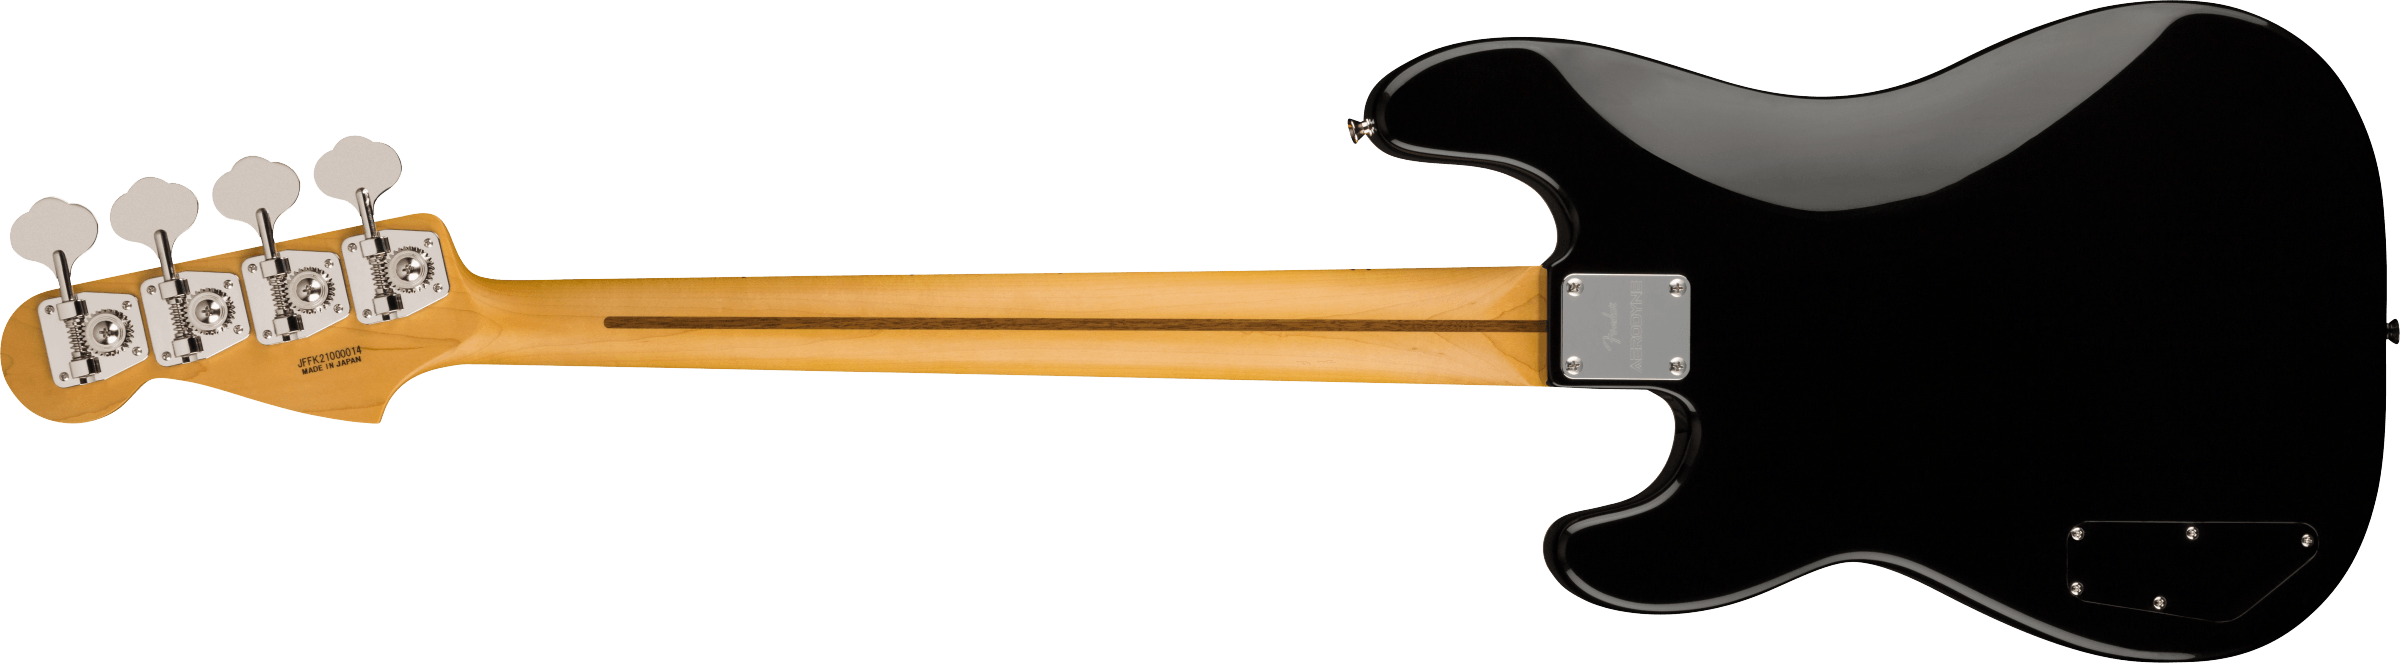 Fender Precision Bass Aerodyne Special Jap Mn - Hot Rod Burst - Basse Électrique Solid Body - Variation 1